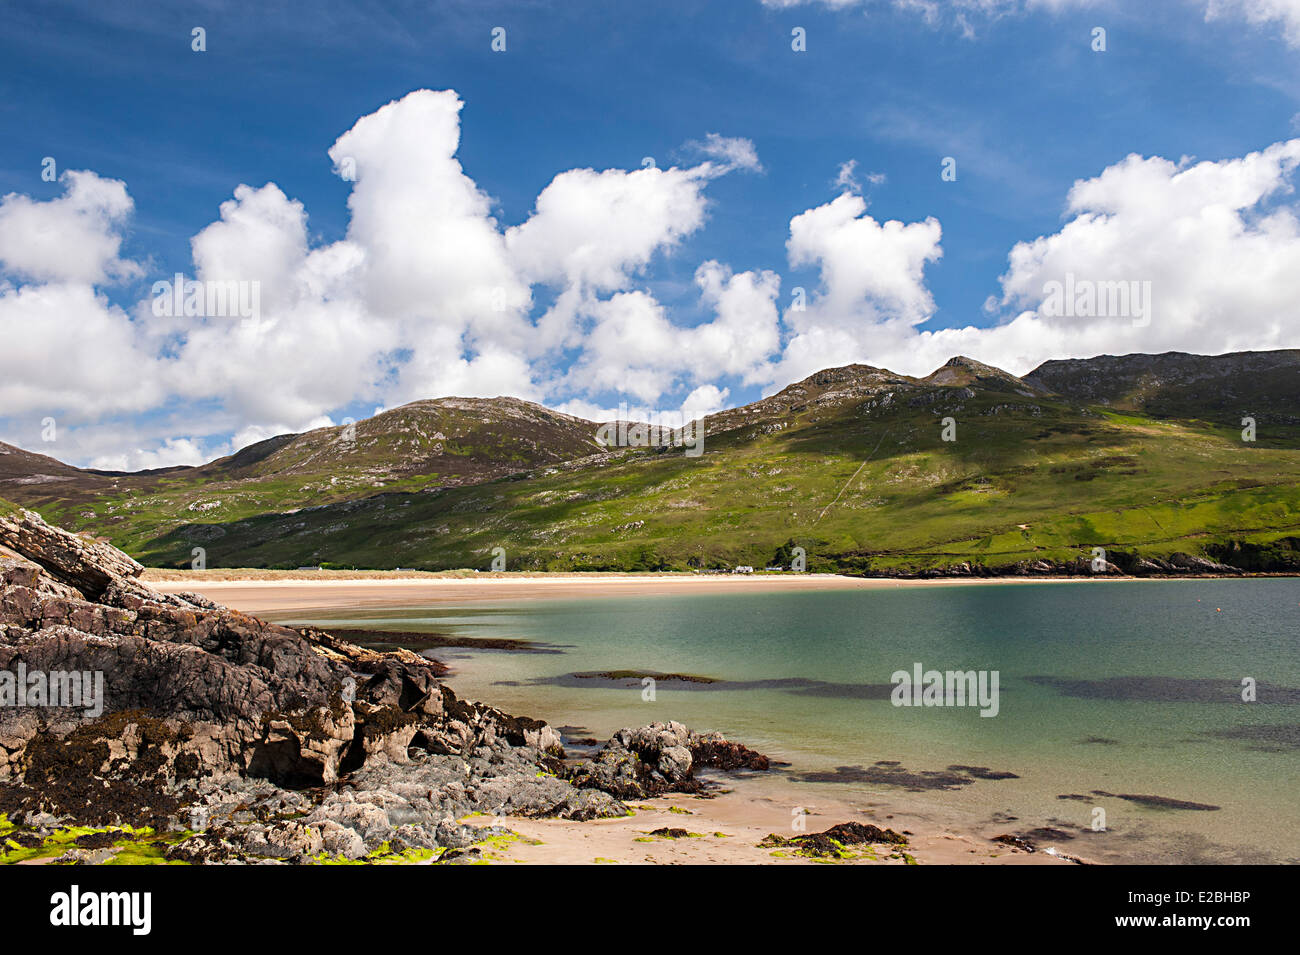 Leenan Head with Leenan Beach, Inishowen Peninsula, County Donegal, Ireland Stock Photo